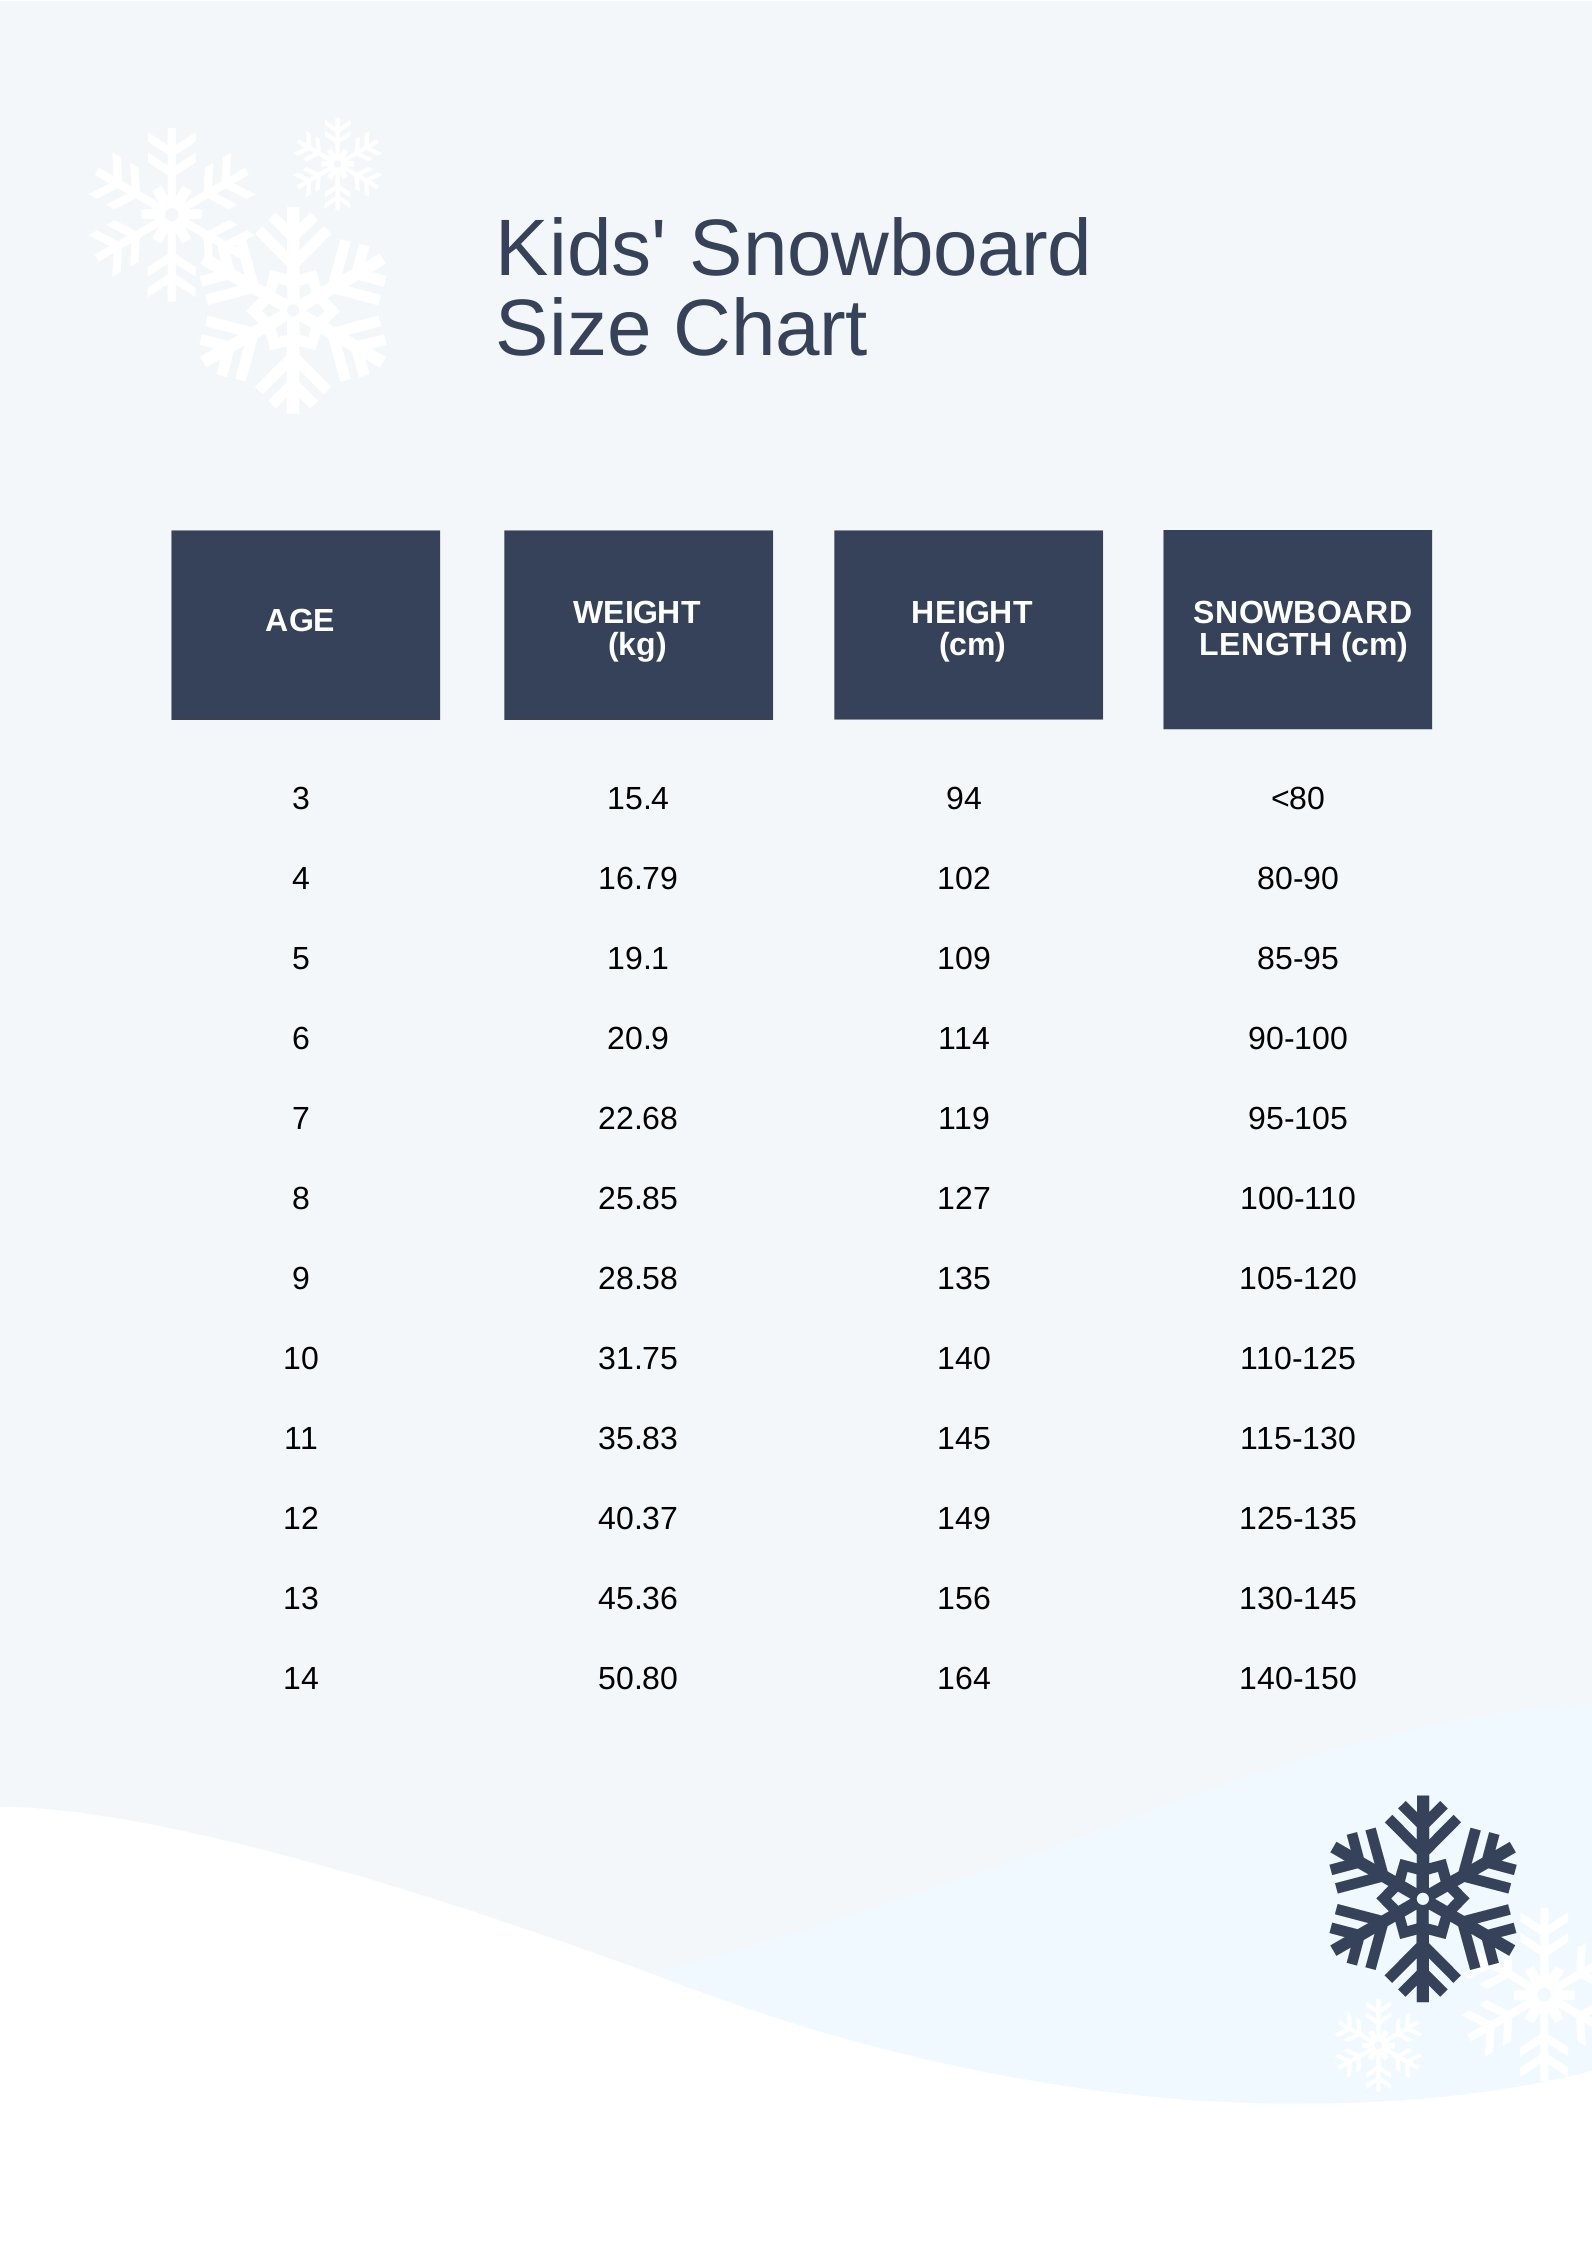 Kids Snowboard Size Chart in PDF